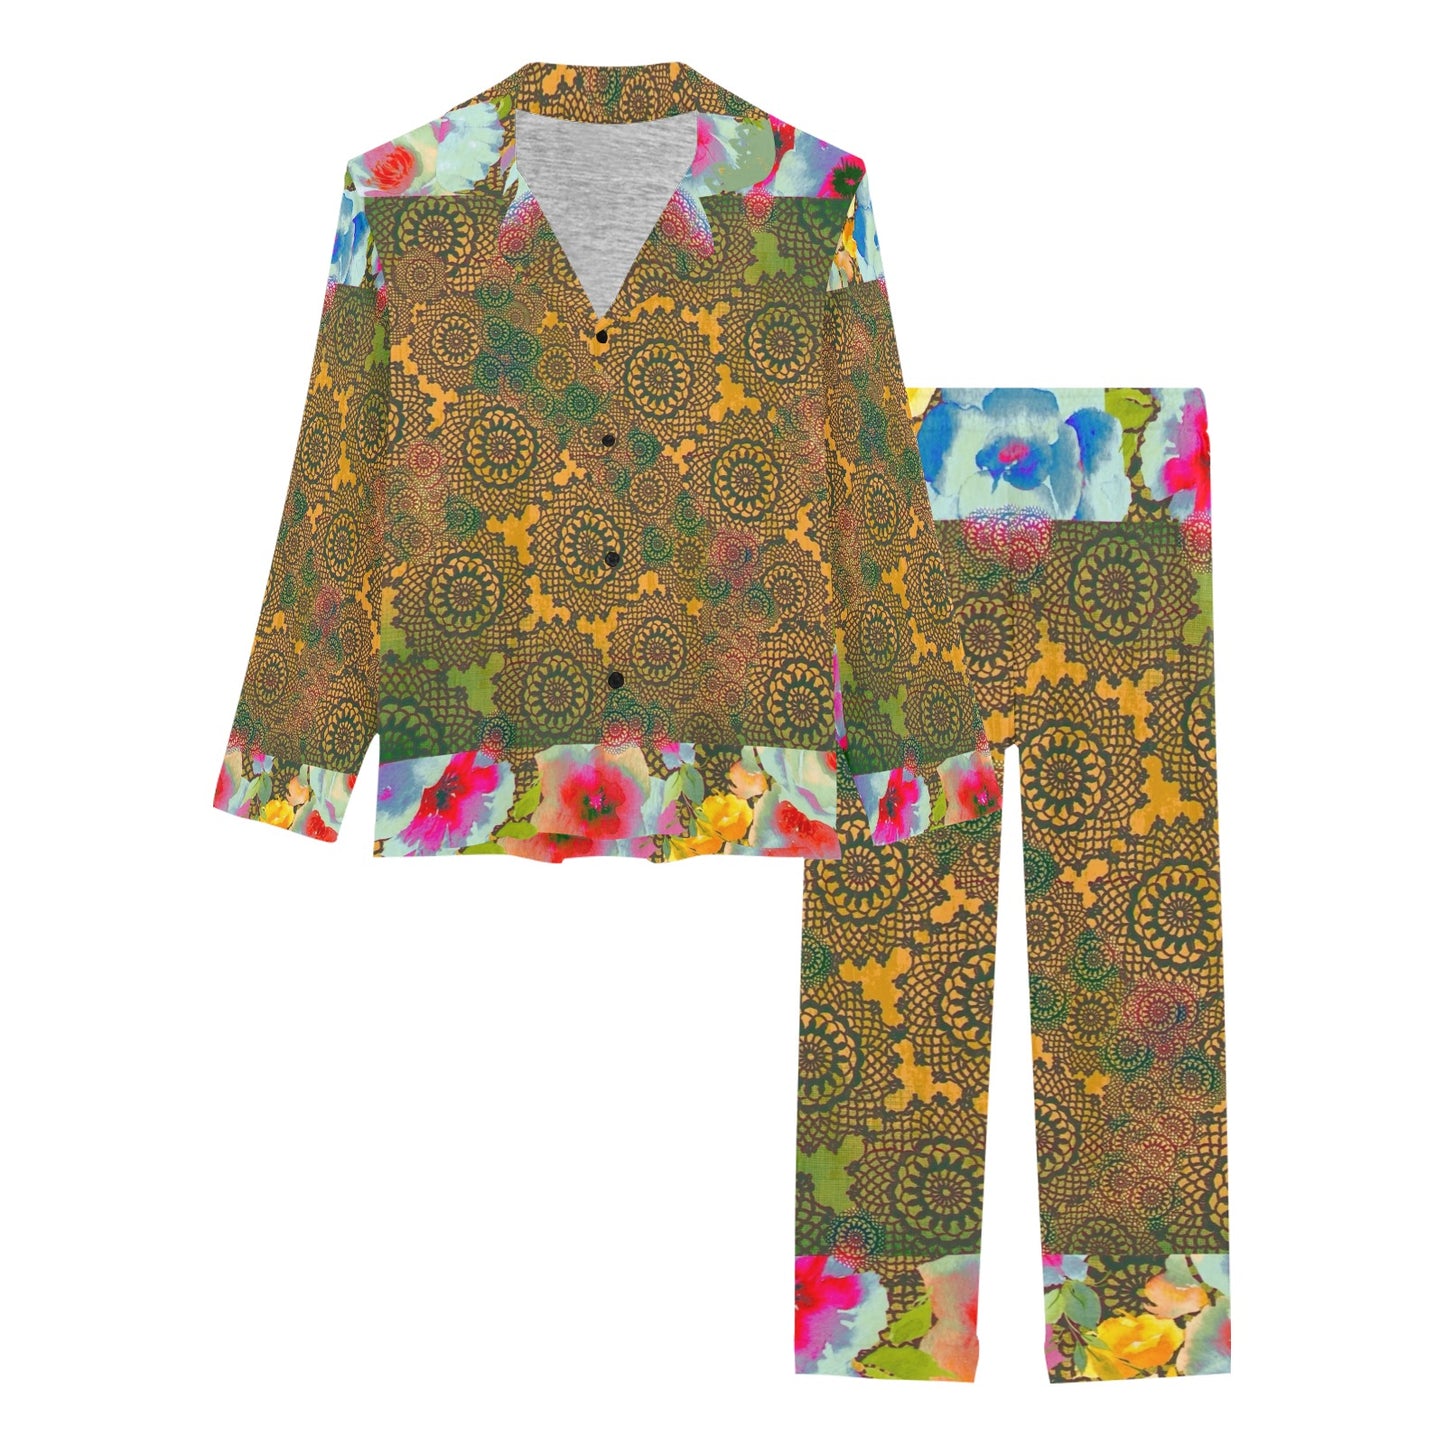 Victorian printed lace pajama set, design 15 Women's Long Pajama Set (Sets 02)